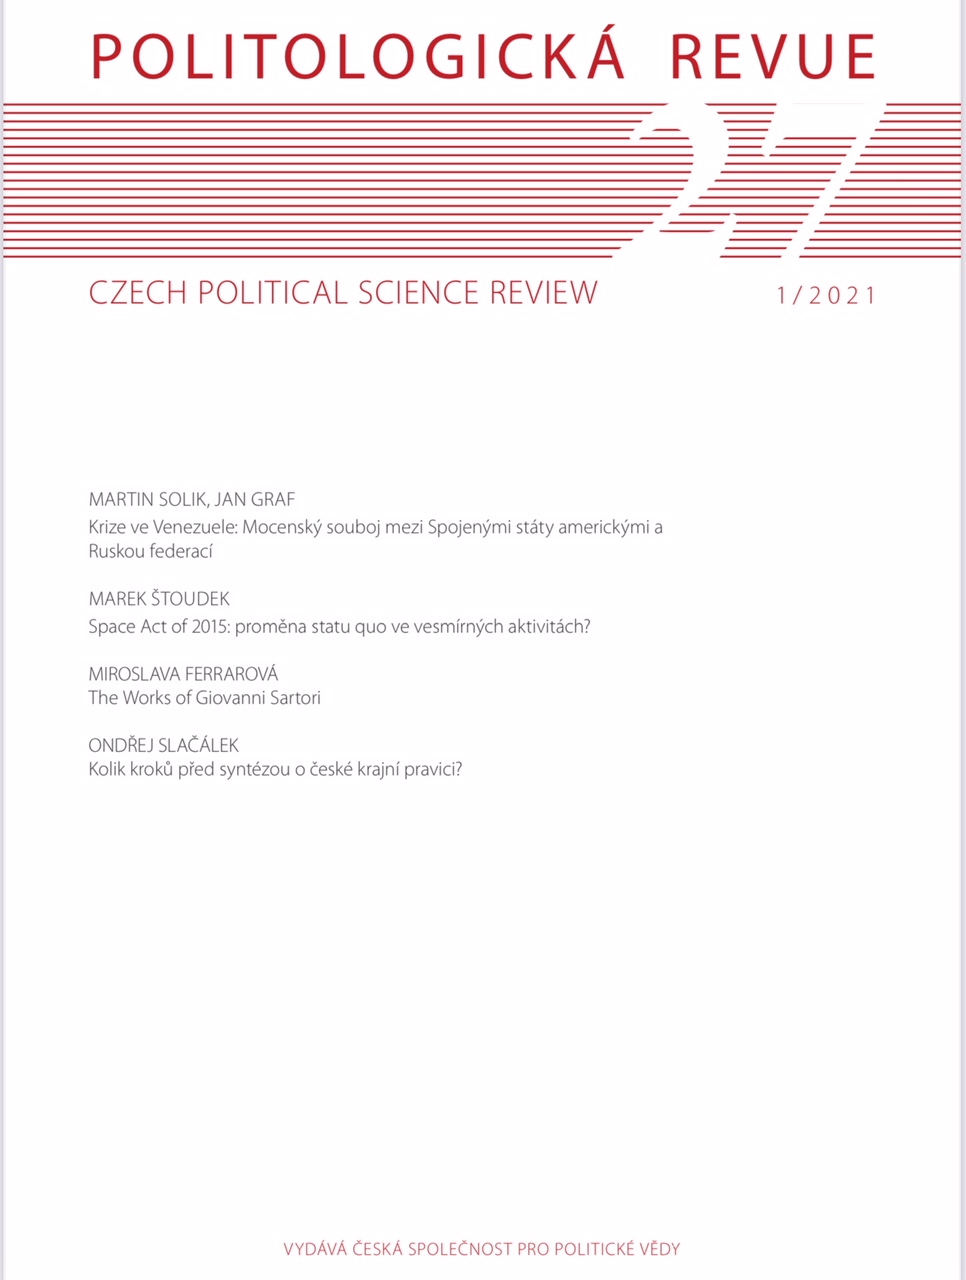 Czech Political Science Review